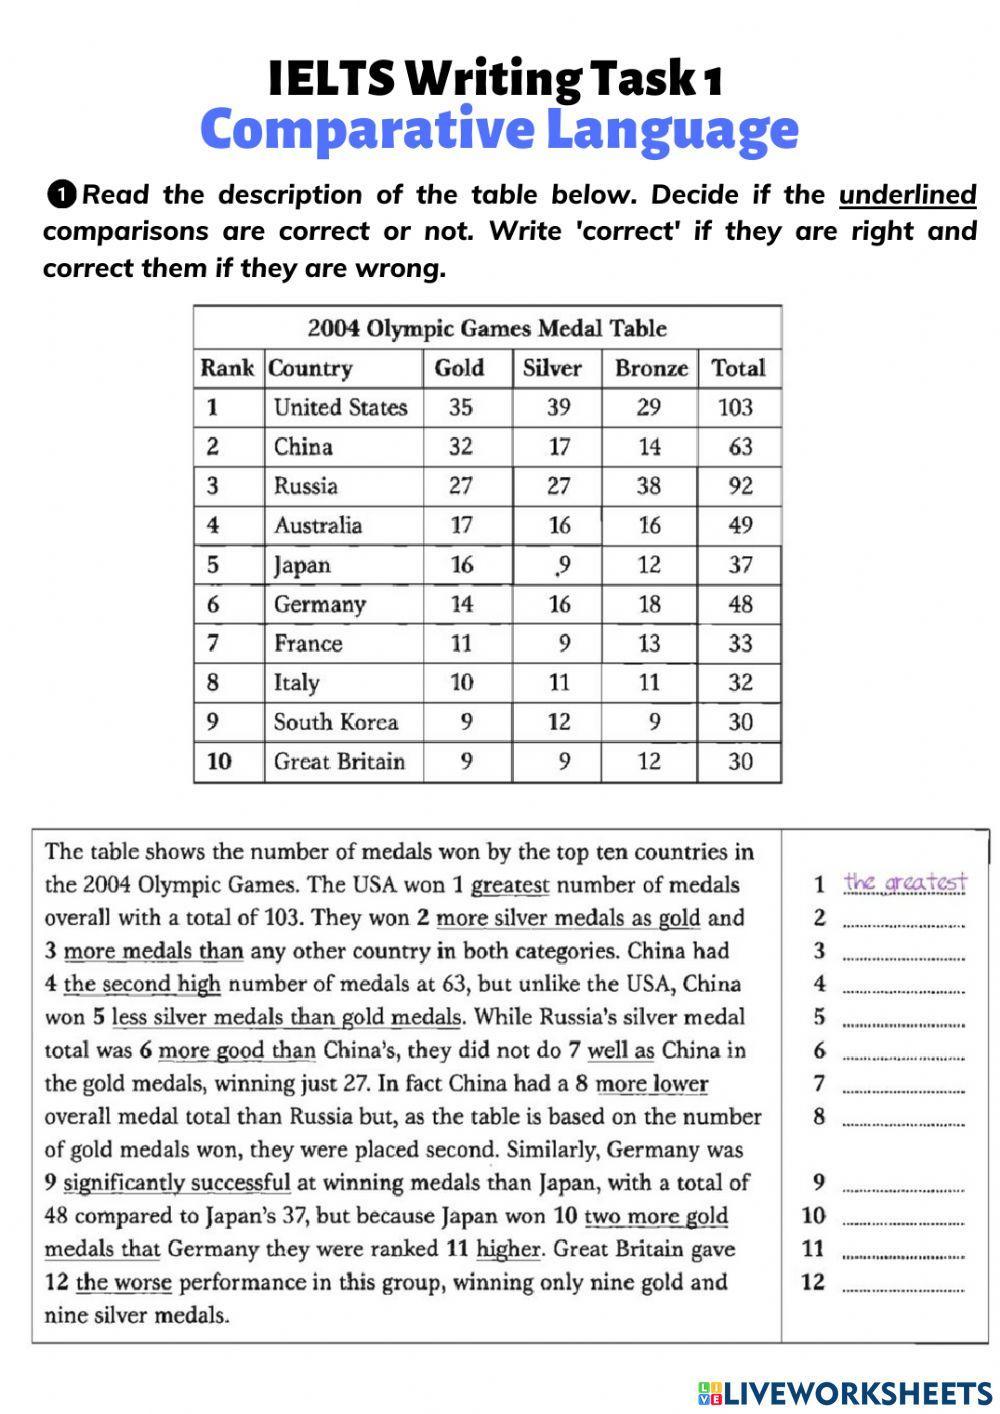 IELTS - Mindset 1 -  Writing Task 1 Comparative Language